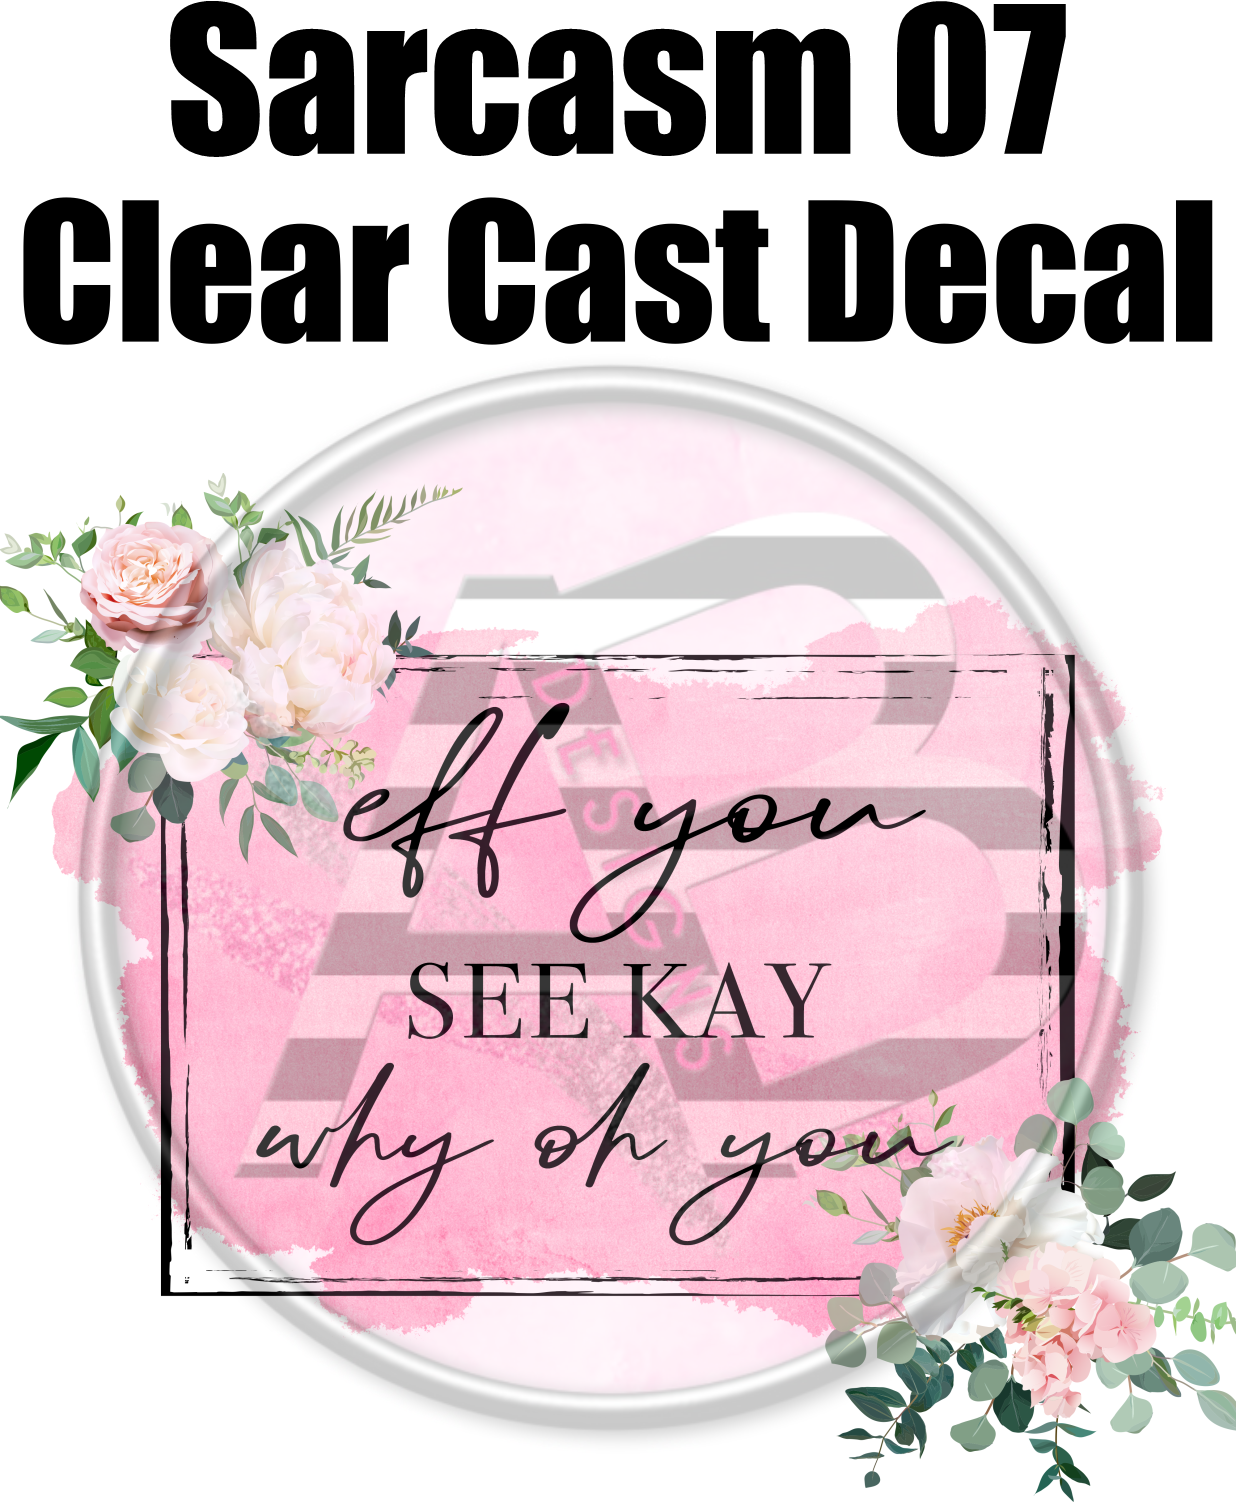 Sarcasm 07 - Clear Cast Decal